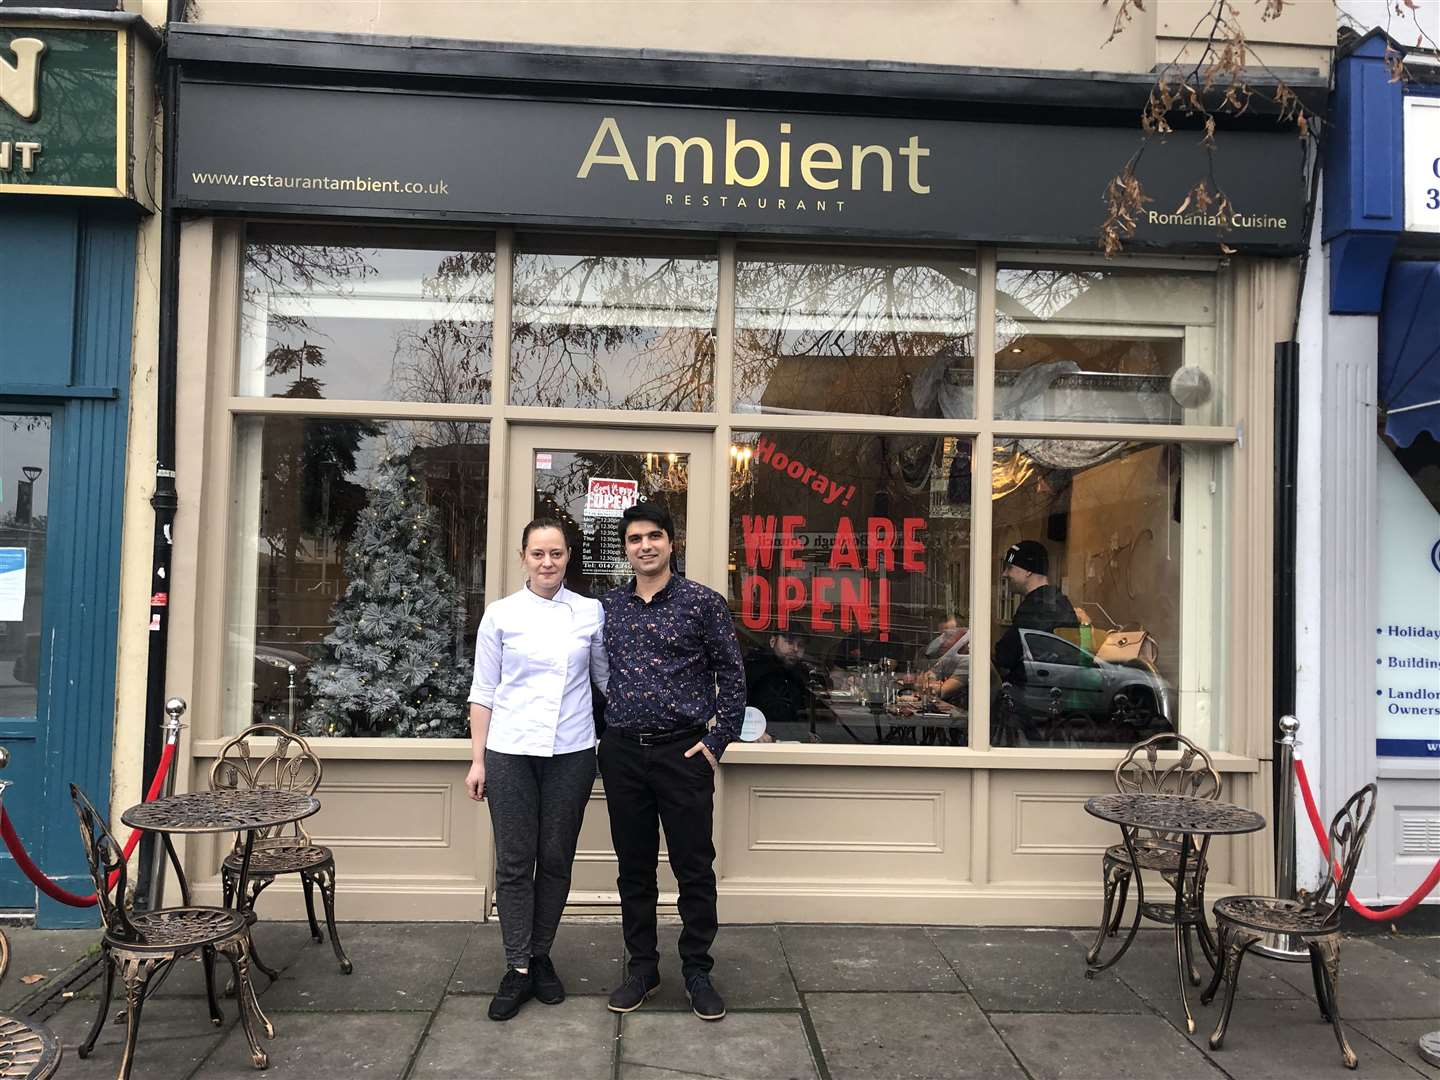 Corina and Vasile Conduraru have opened the restaurant in Windmill Street, Gravesend